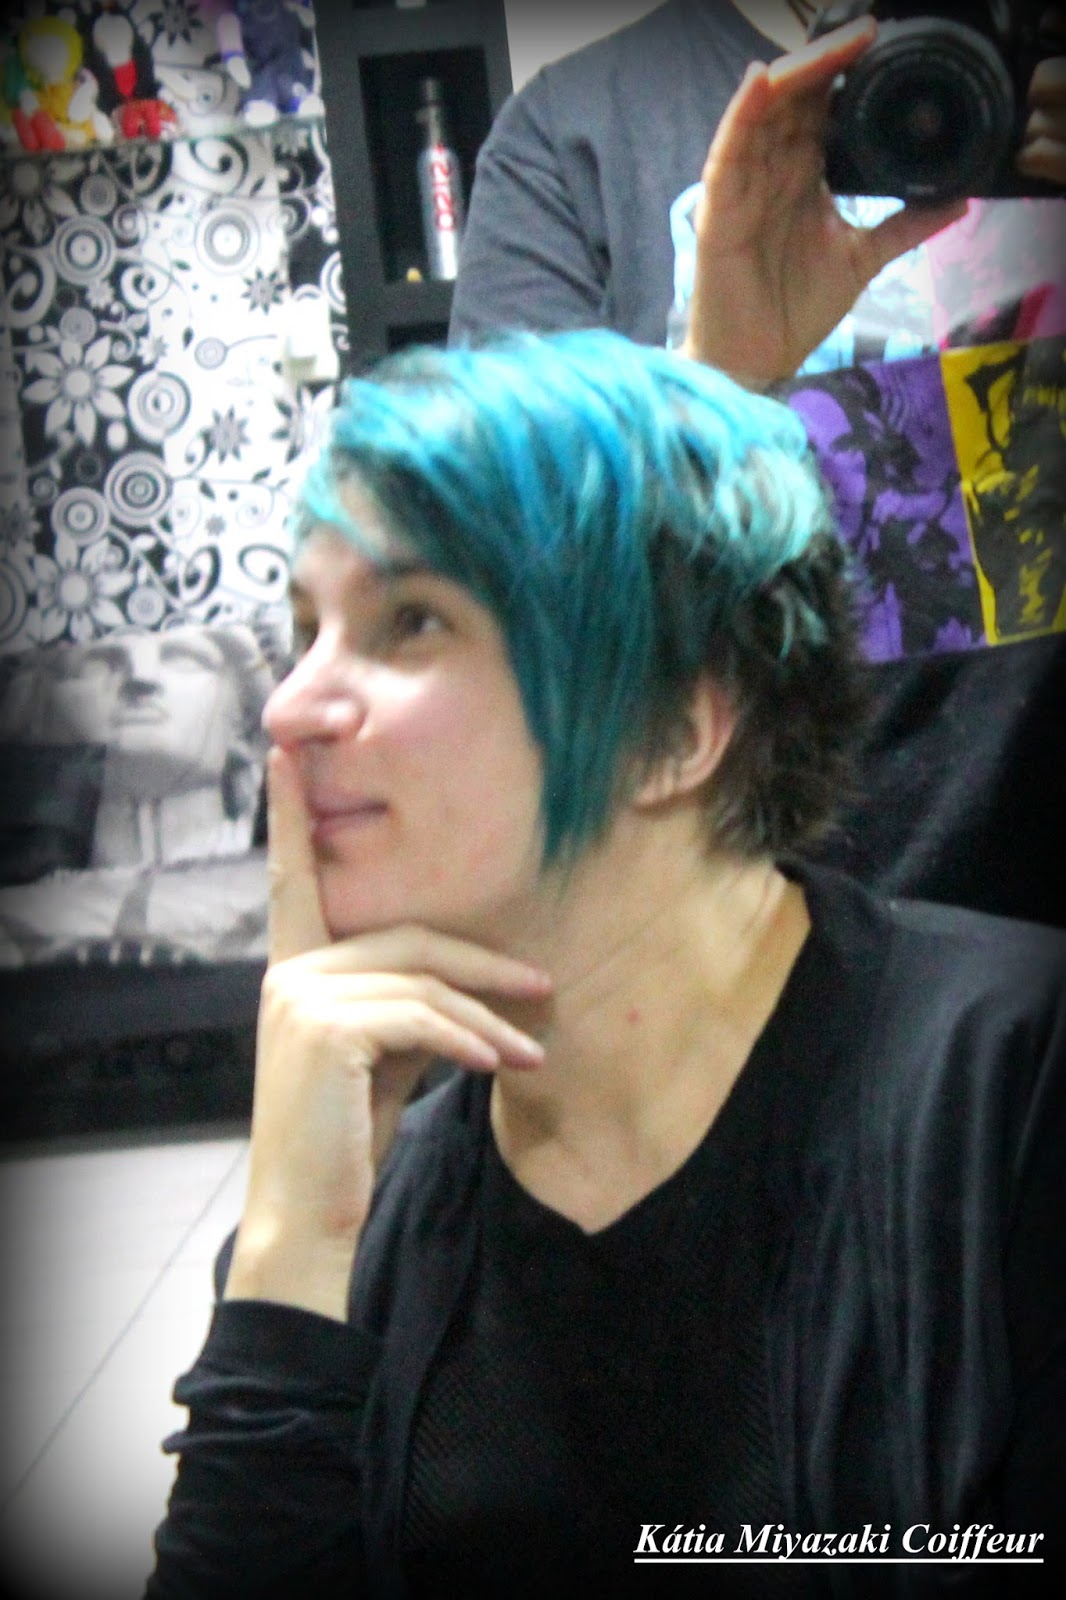 Katia Miyazaki Alternative Salon: Cabelos coloridos - verde